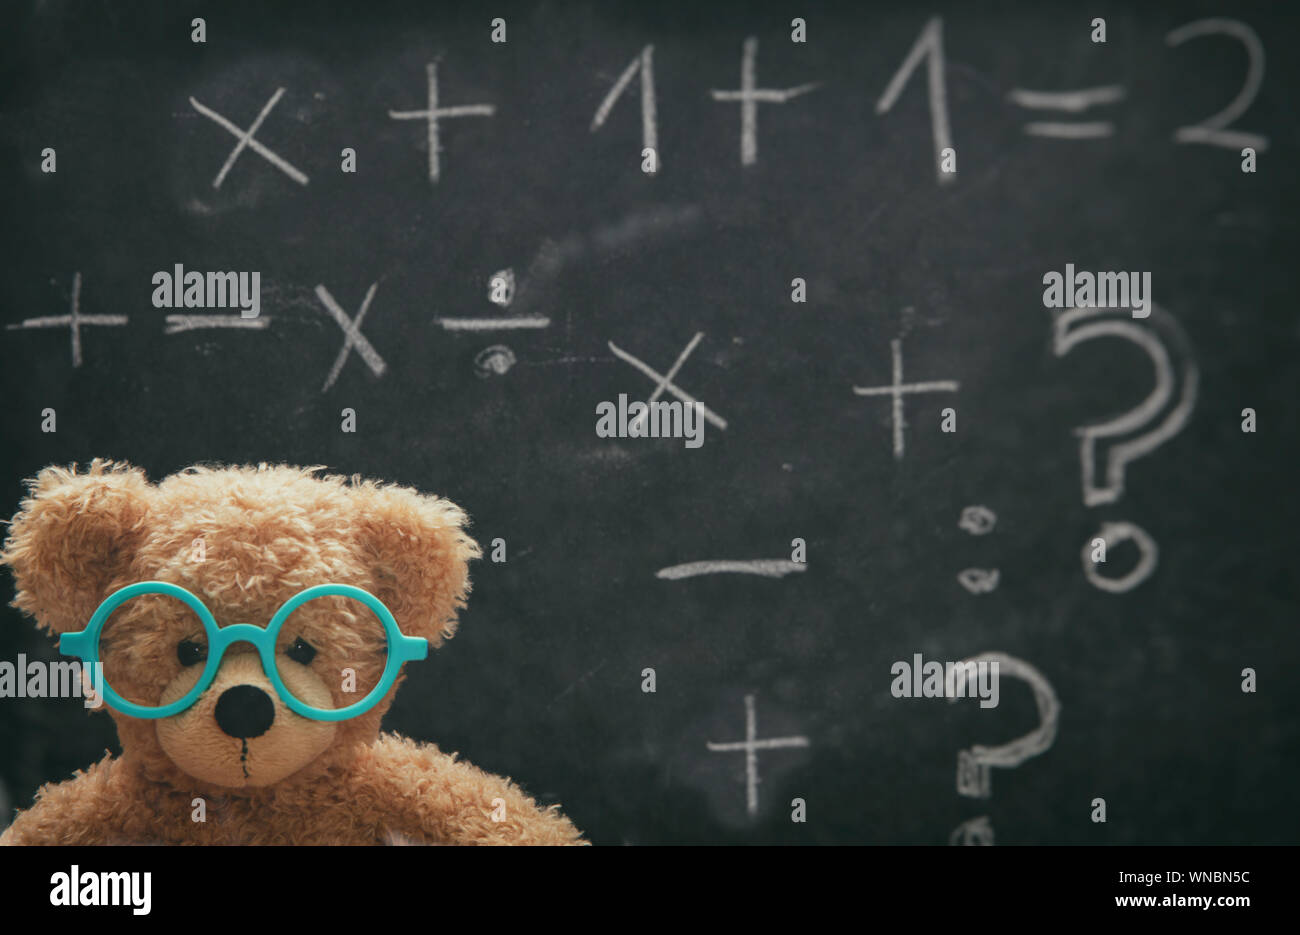 Maths concept. Smart kid in school class, cute teddy wearing blue eyeglasses and math symbols on blackboard Stock Photo